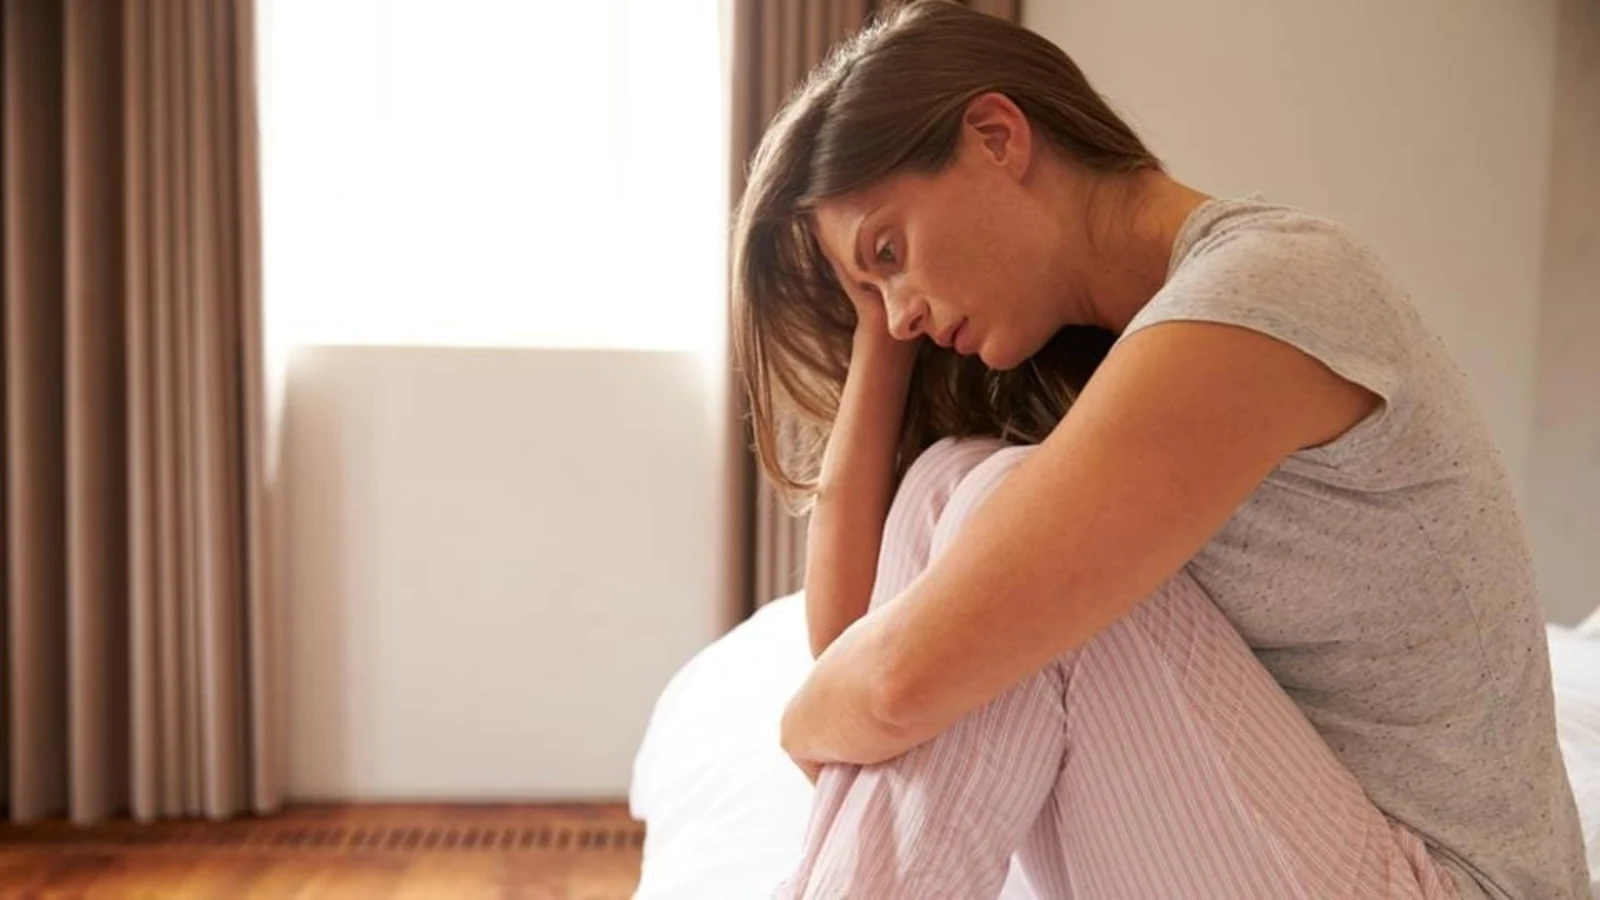 Non-traditional shifts may delay the onset of natural menopause, says new study